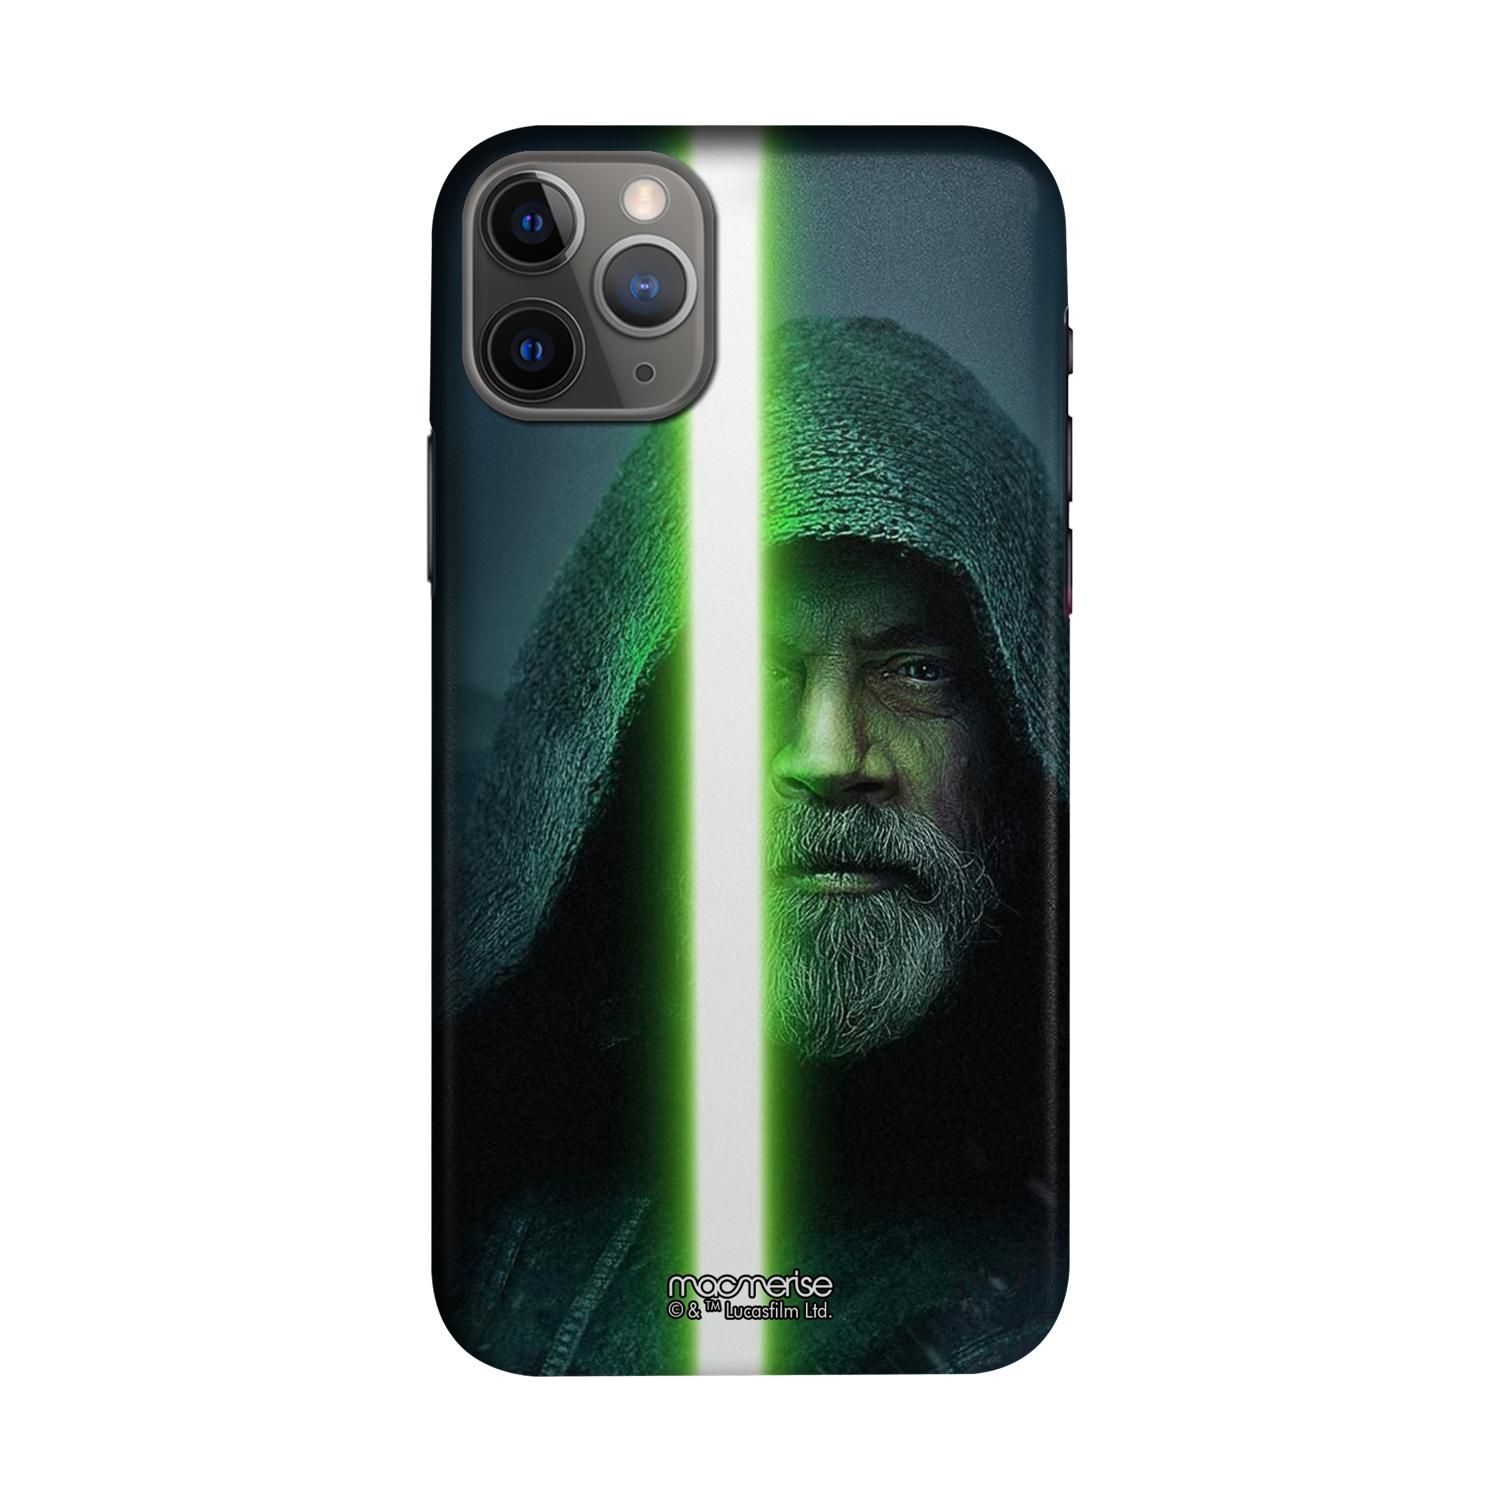 Buy Light Saber Green - Sleek Phone Case for iPhone 11 Pro Max Online